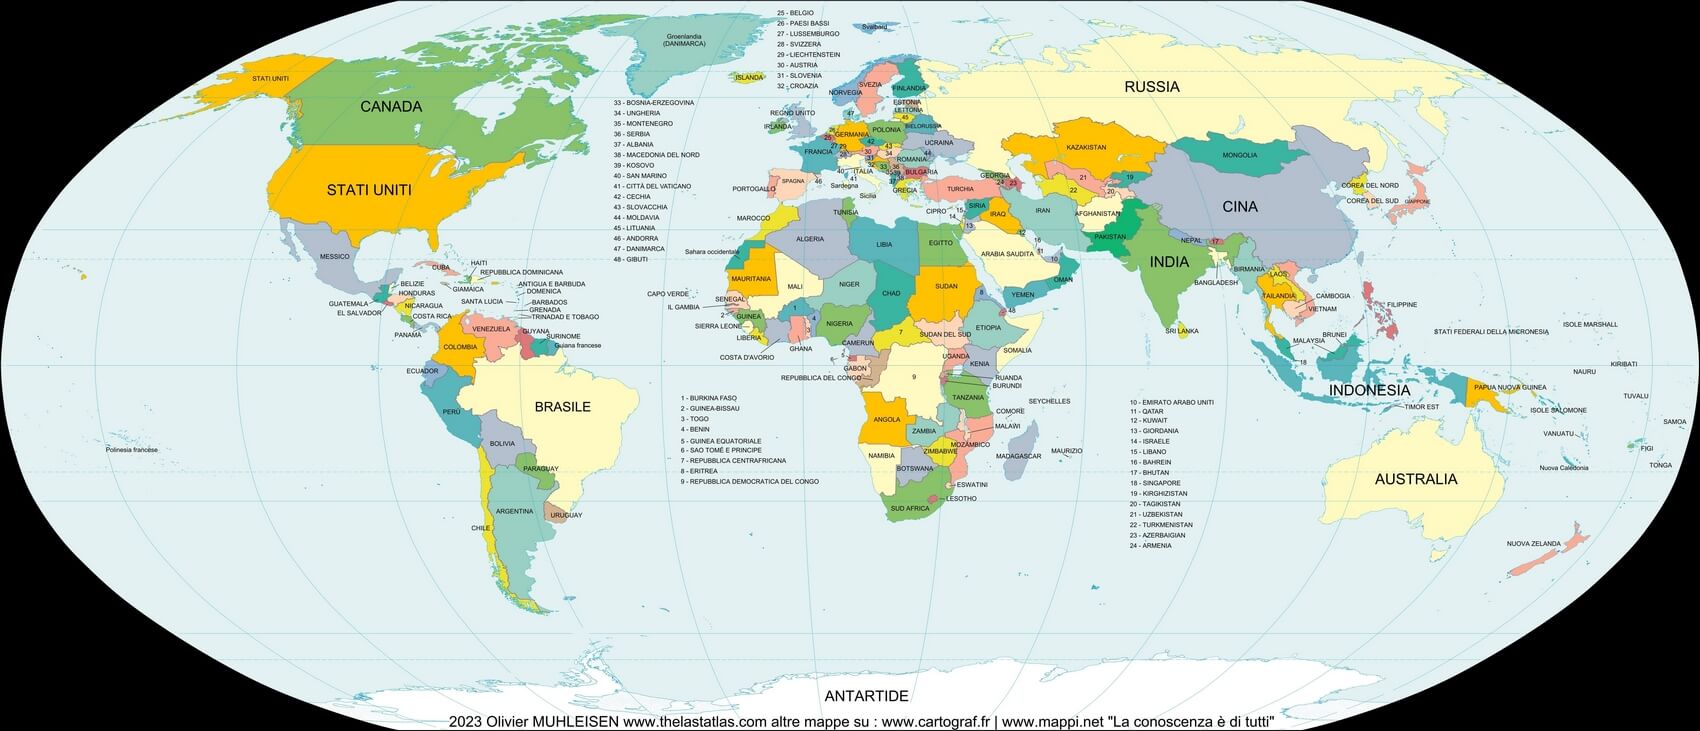 Mapa mundi com países em italiano